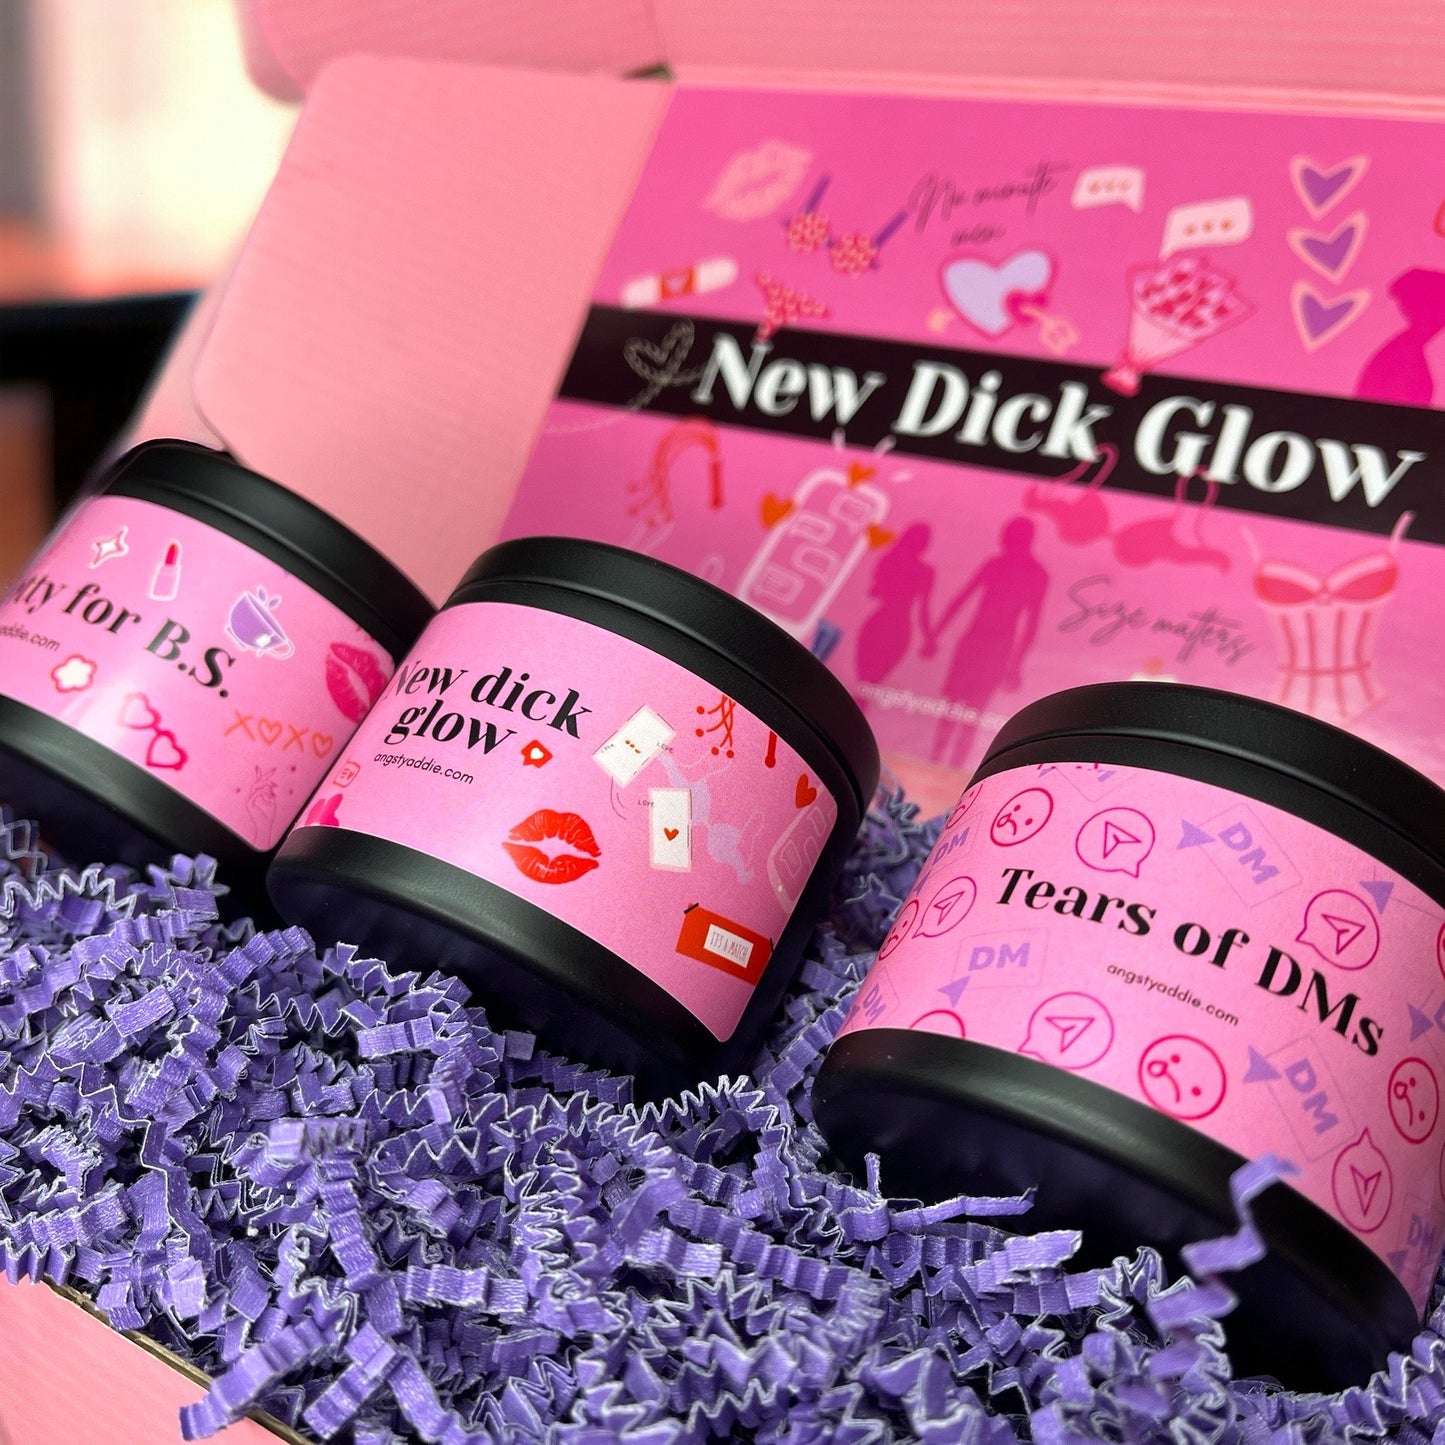 New Dick Glow gift box set